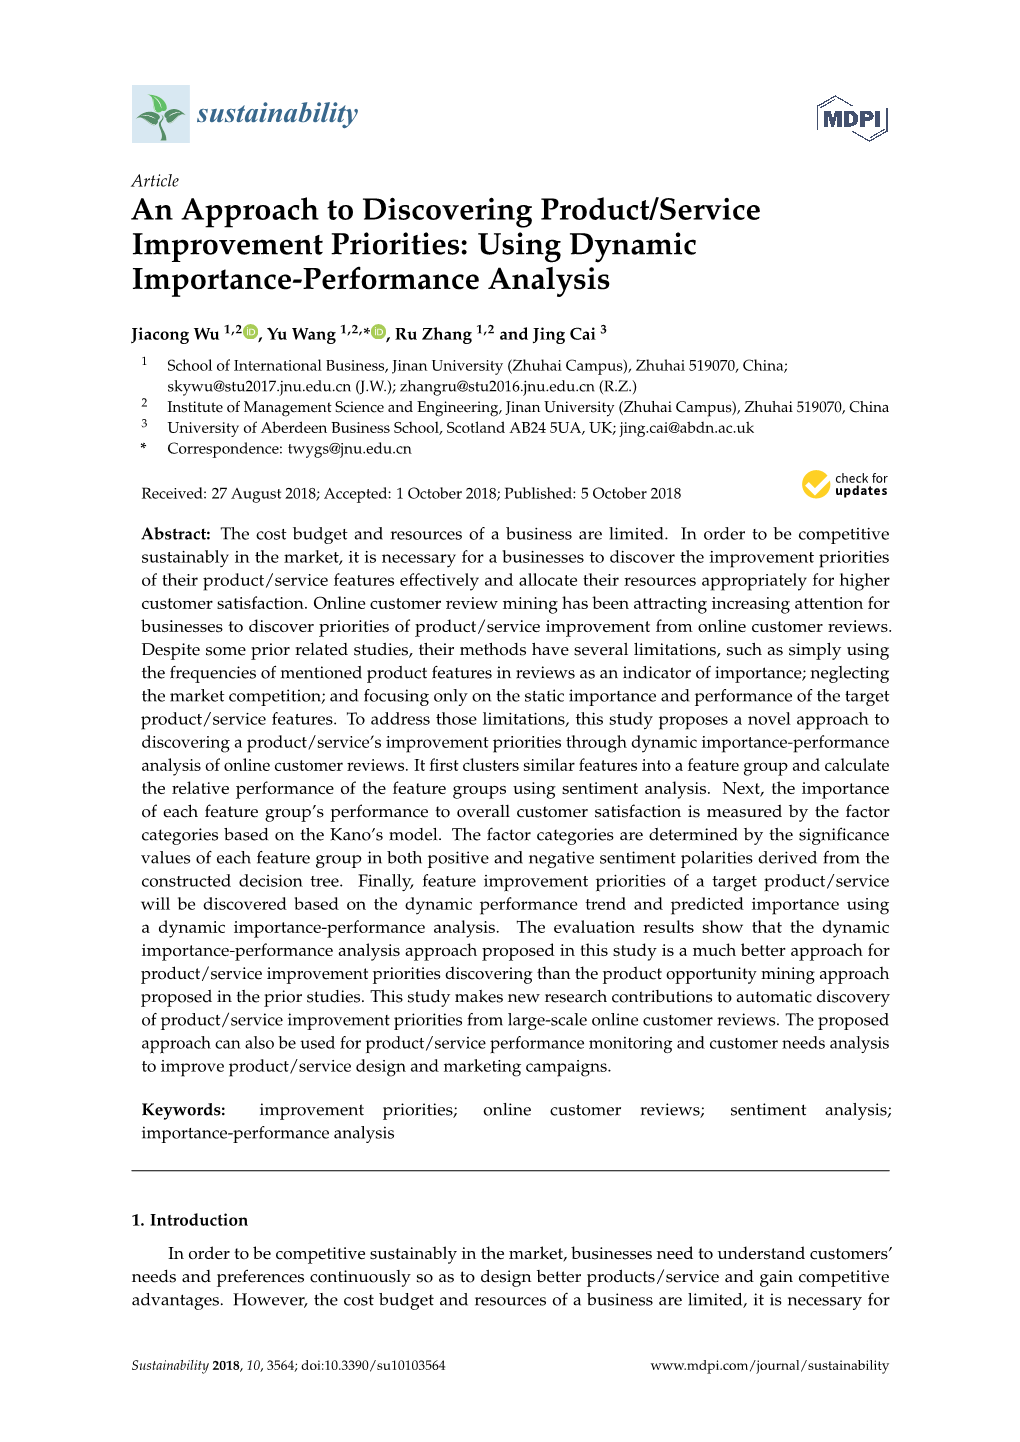 Using Dynamic Importance-Performance Analysis